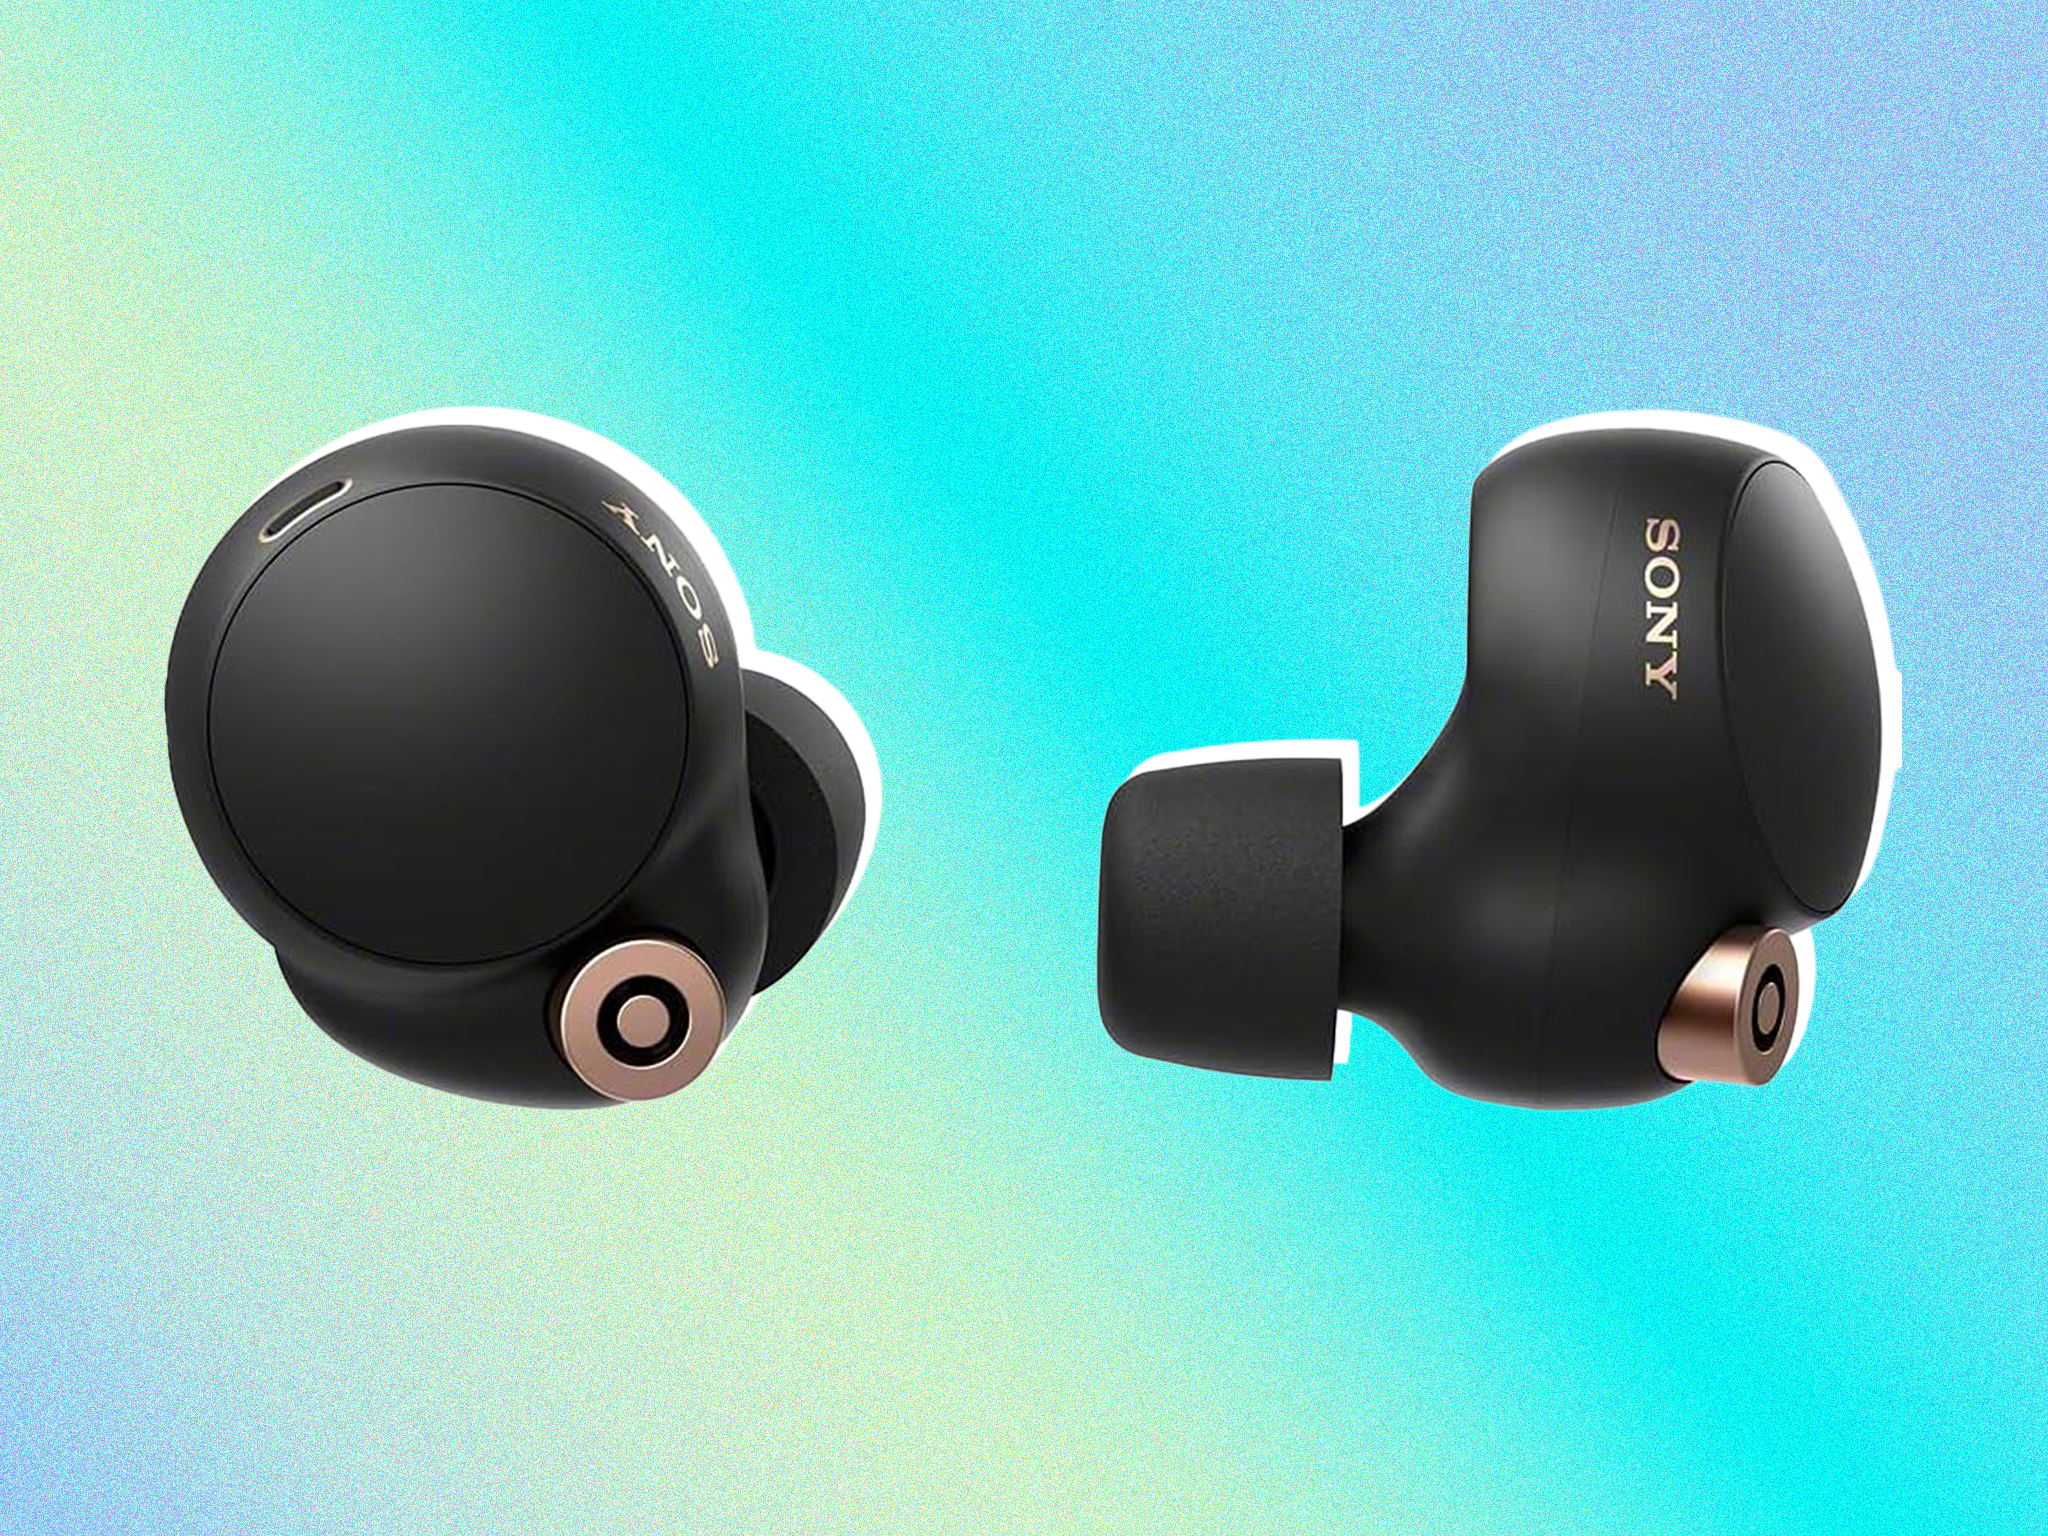 Buy WF-1000XM4 Wireless Noise Cancelling Headphones - Sony UK